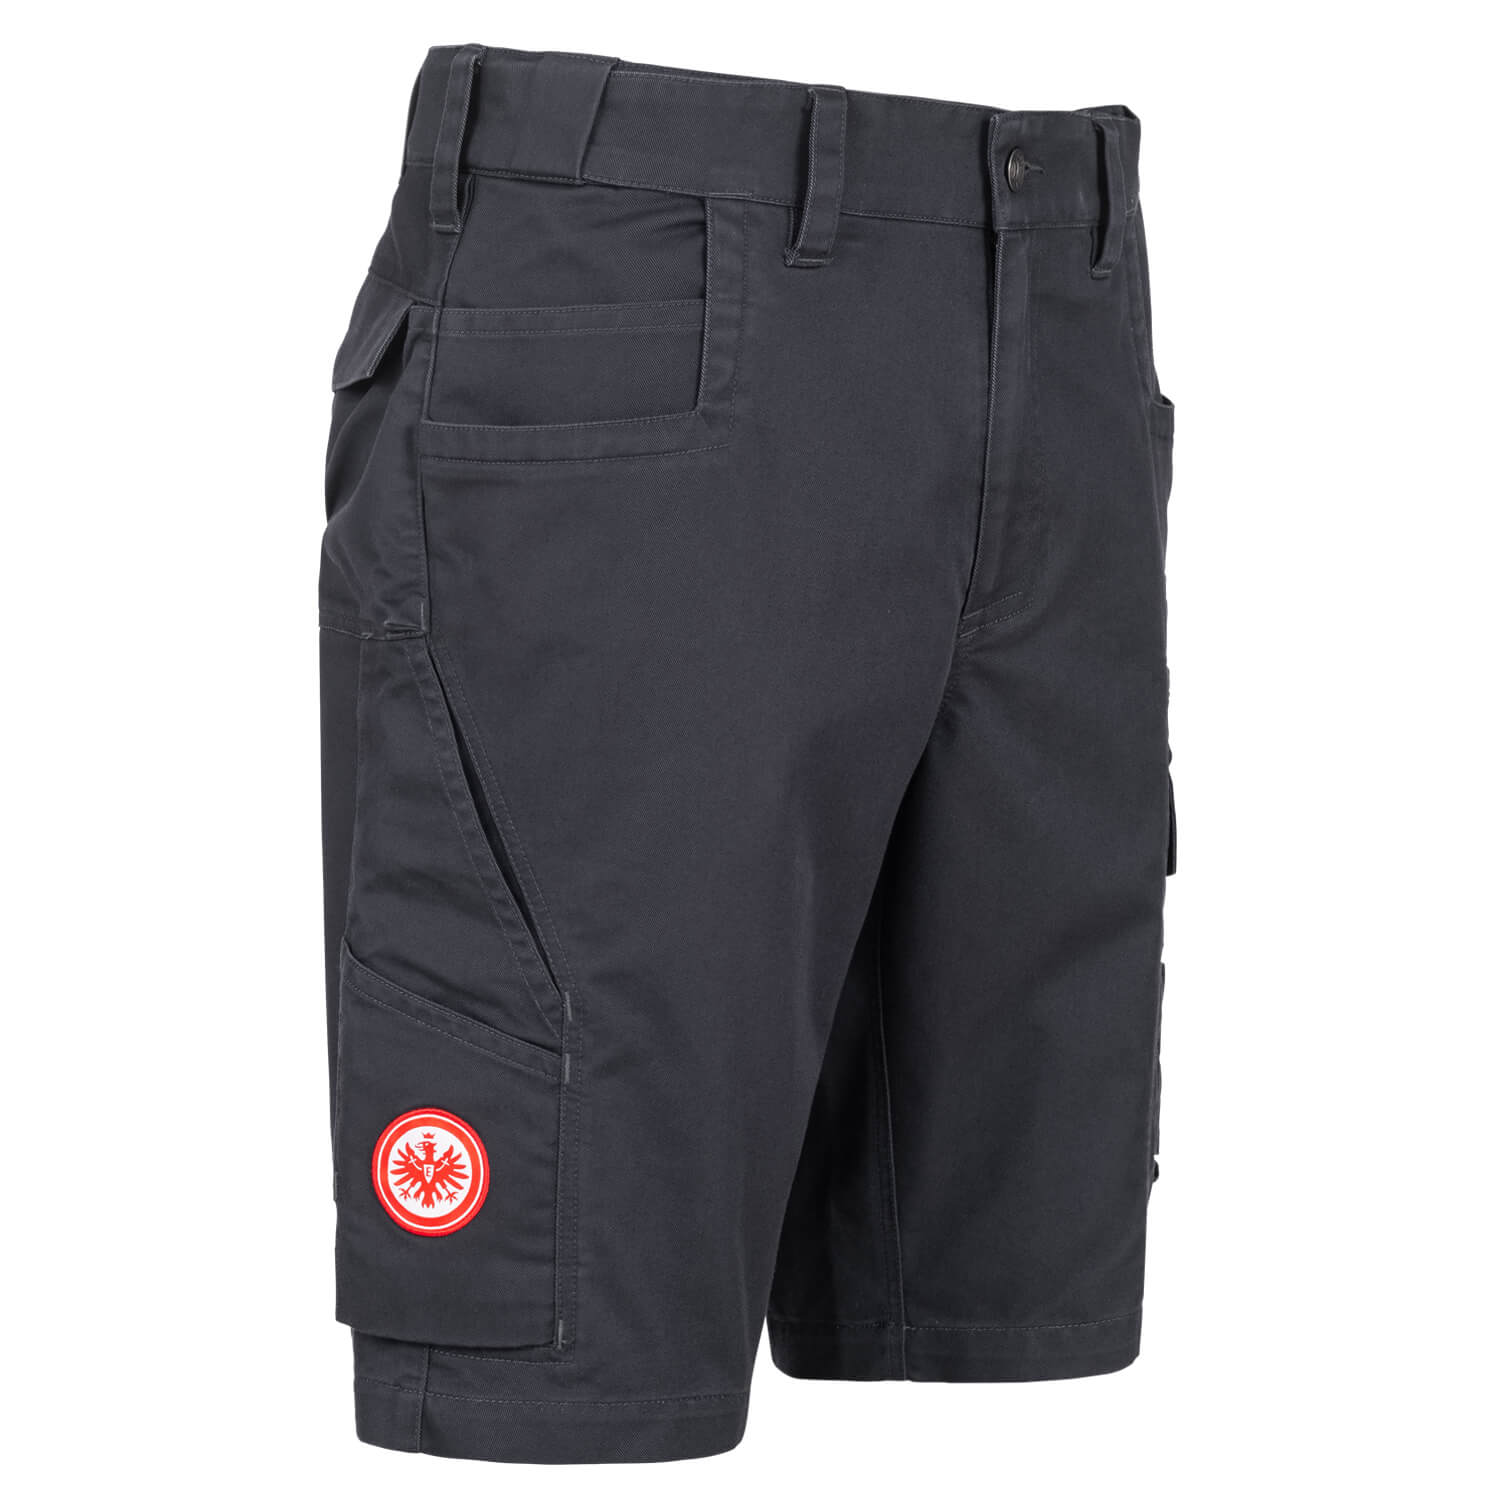 Bild 2: Workwear Pants Short Anthracite